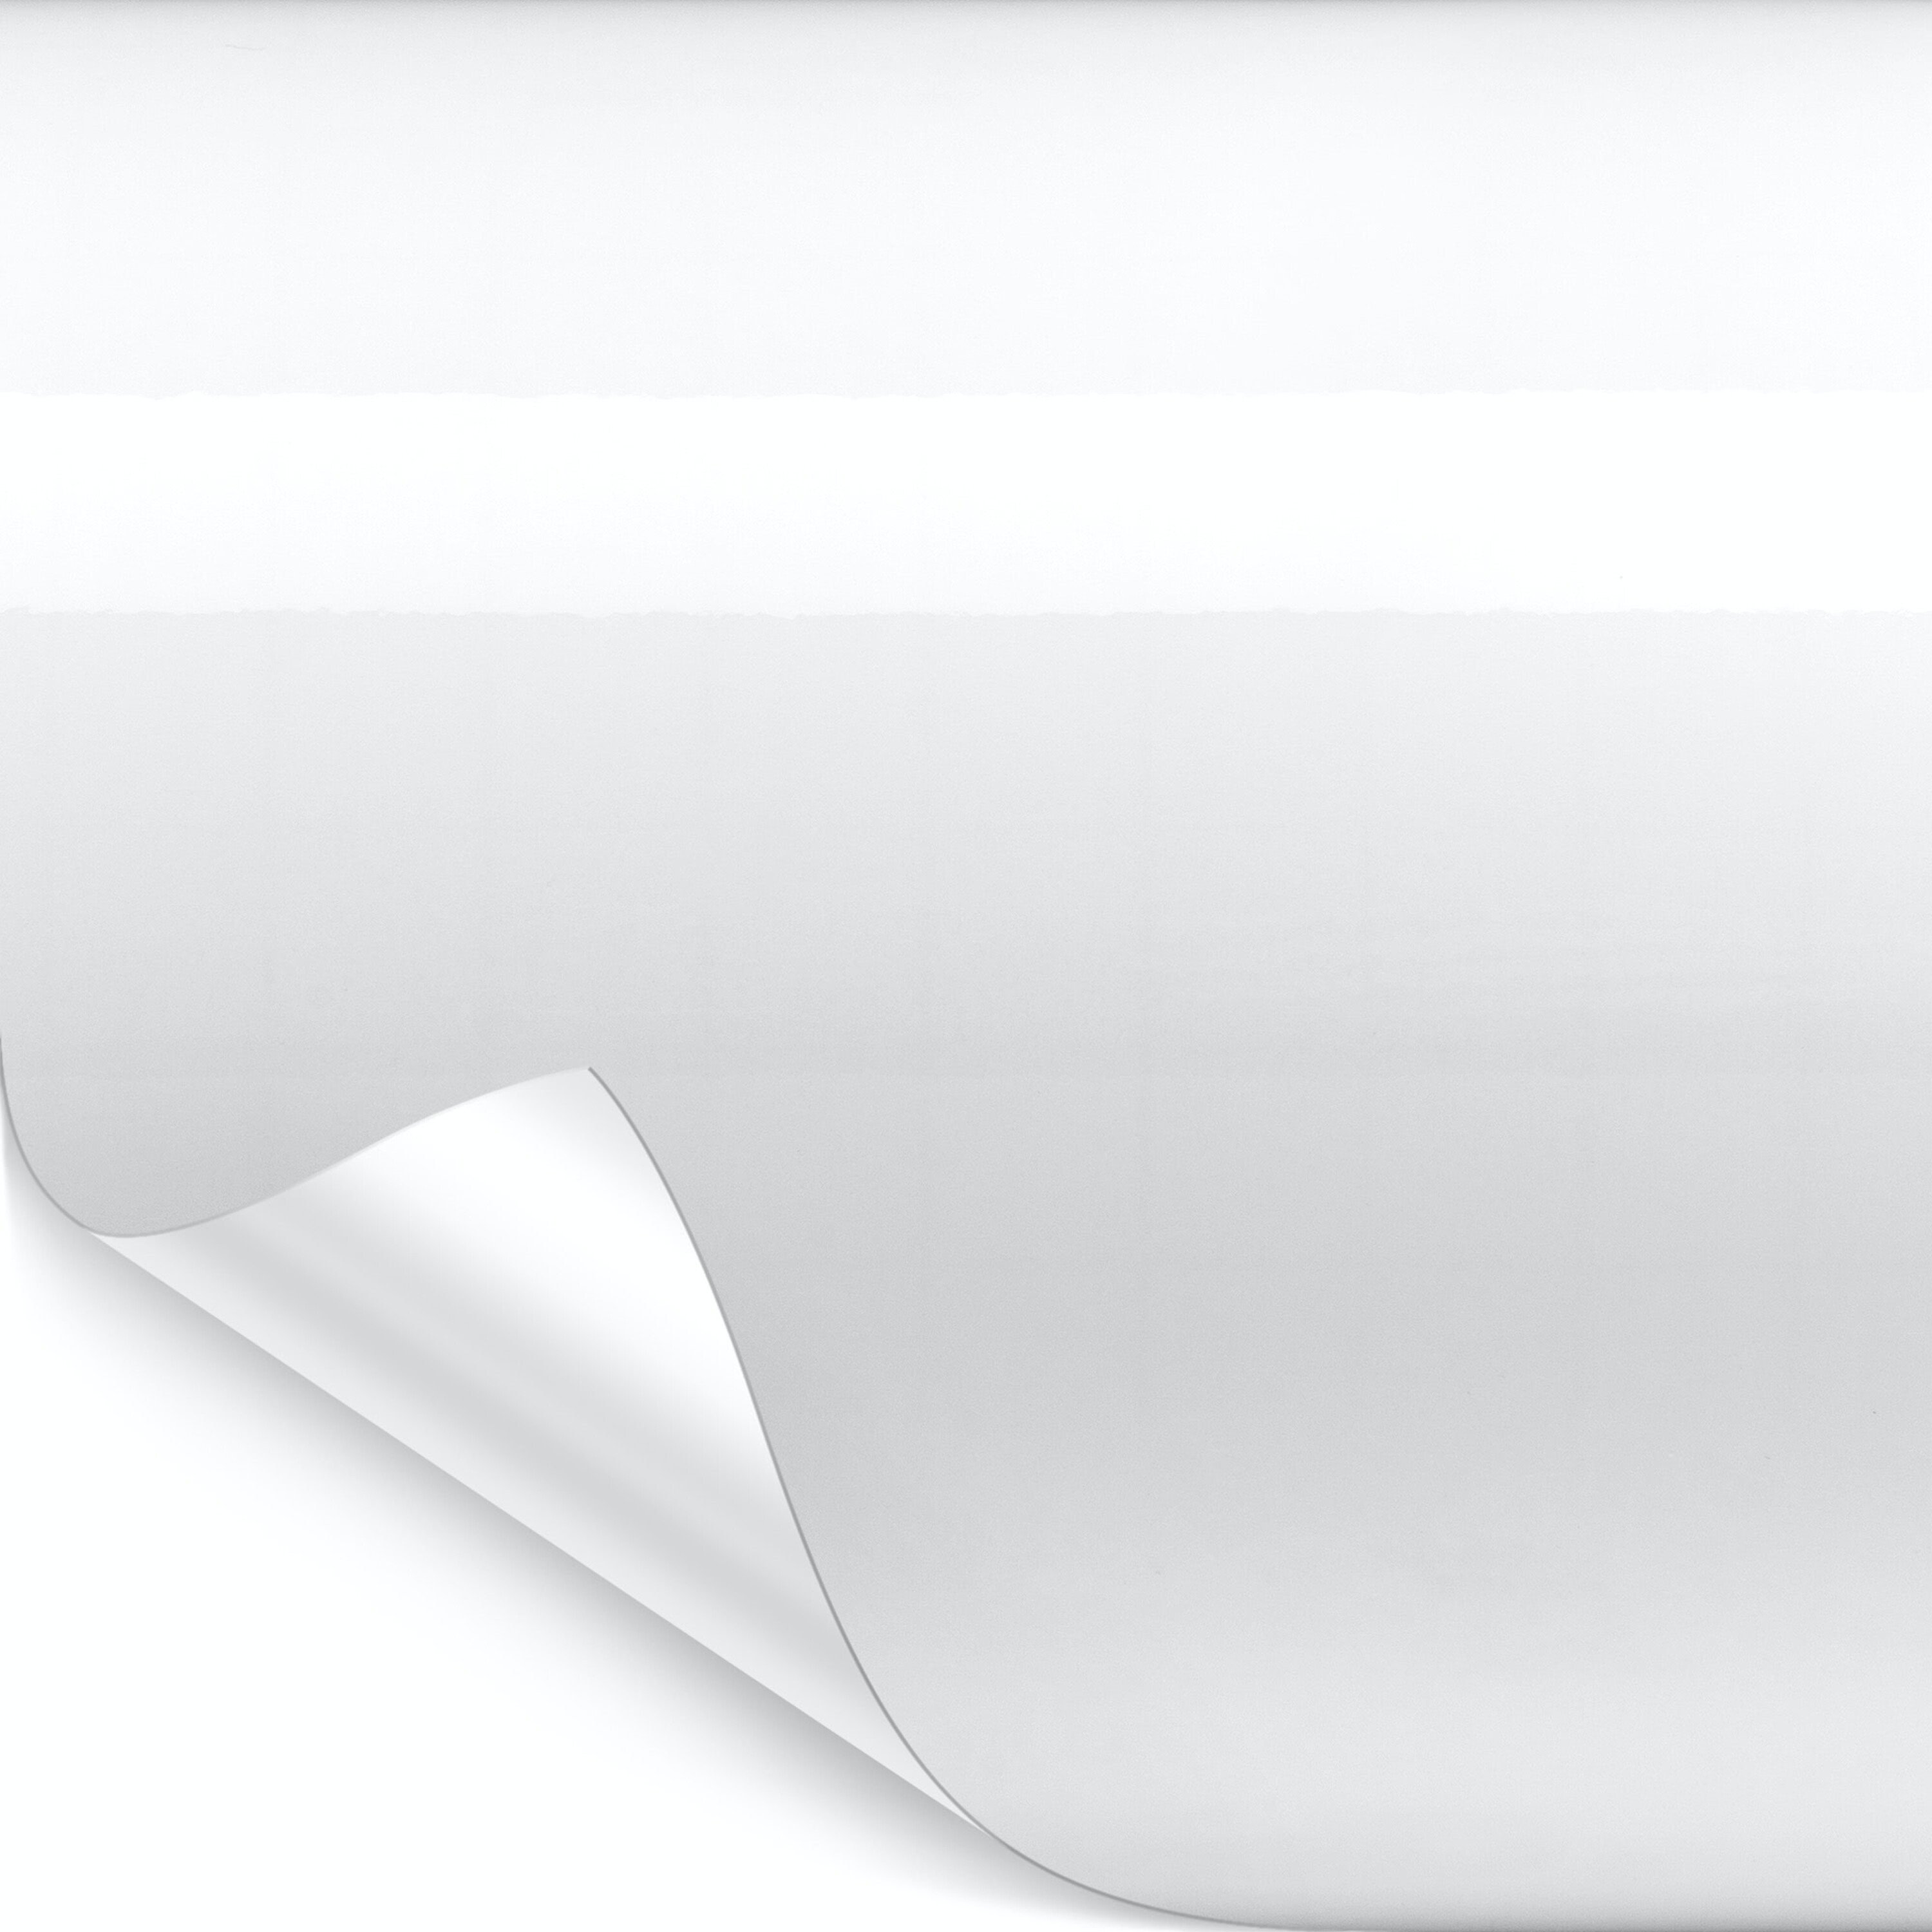 Schutzfolie transparent, 300 mm, Rolle zu 2,5 m – ProGlass